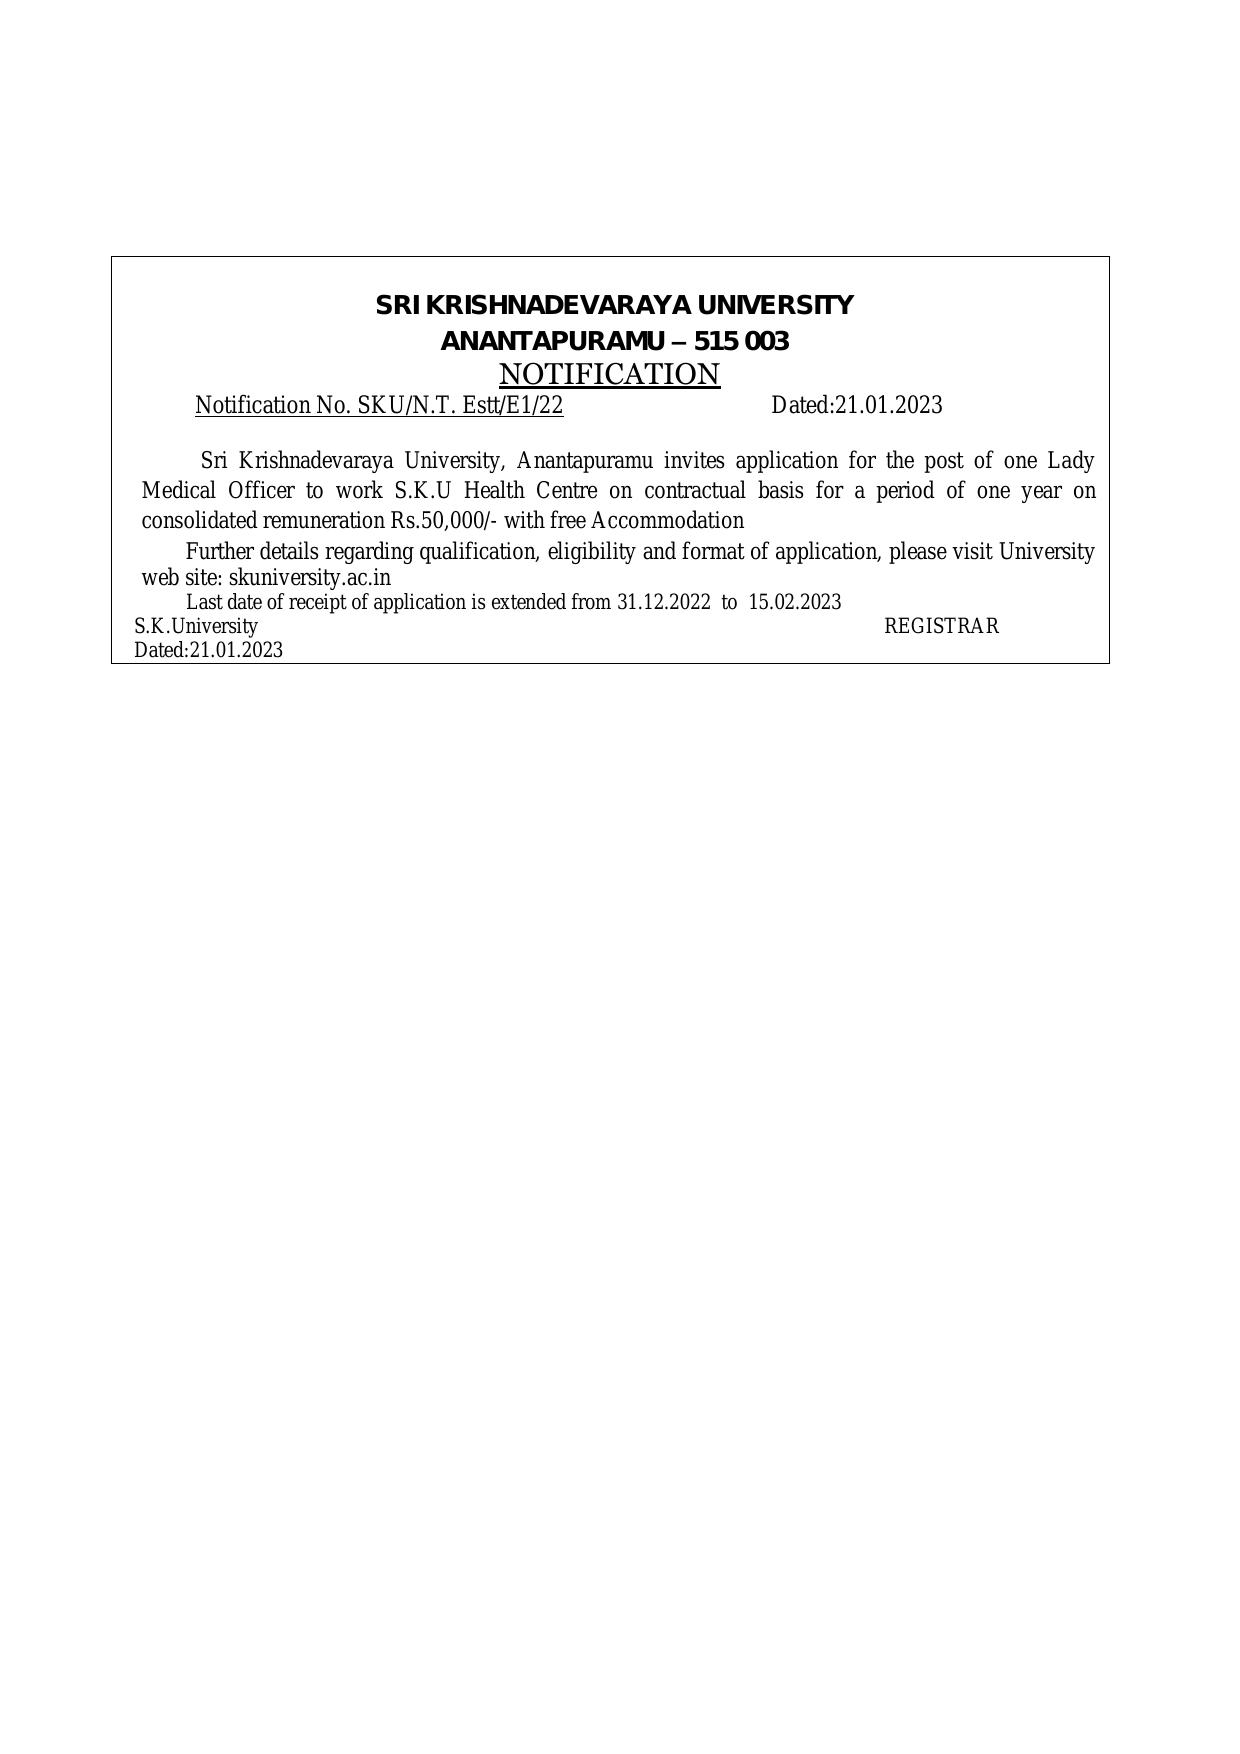 Sri Krishnadevaraya University Invites Application for Lady Medical Officer Recruitment 2023 - Page 3